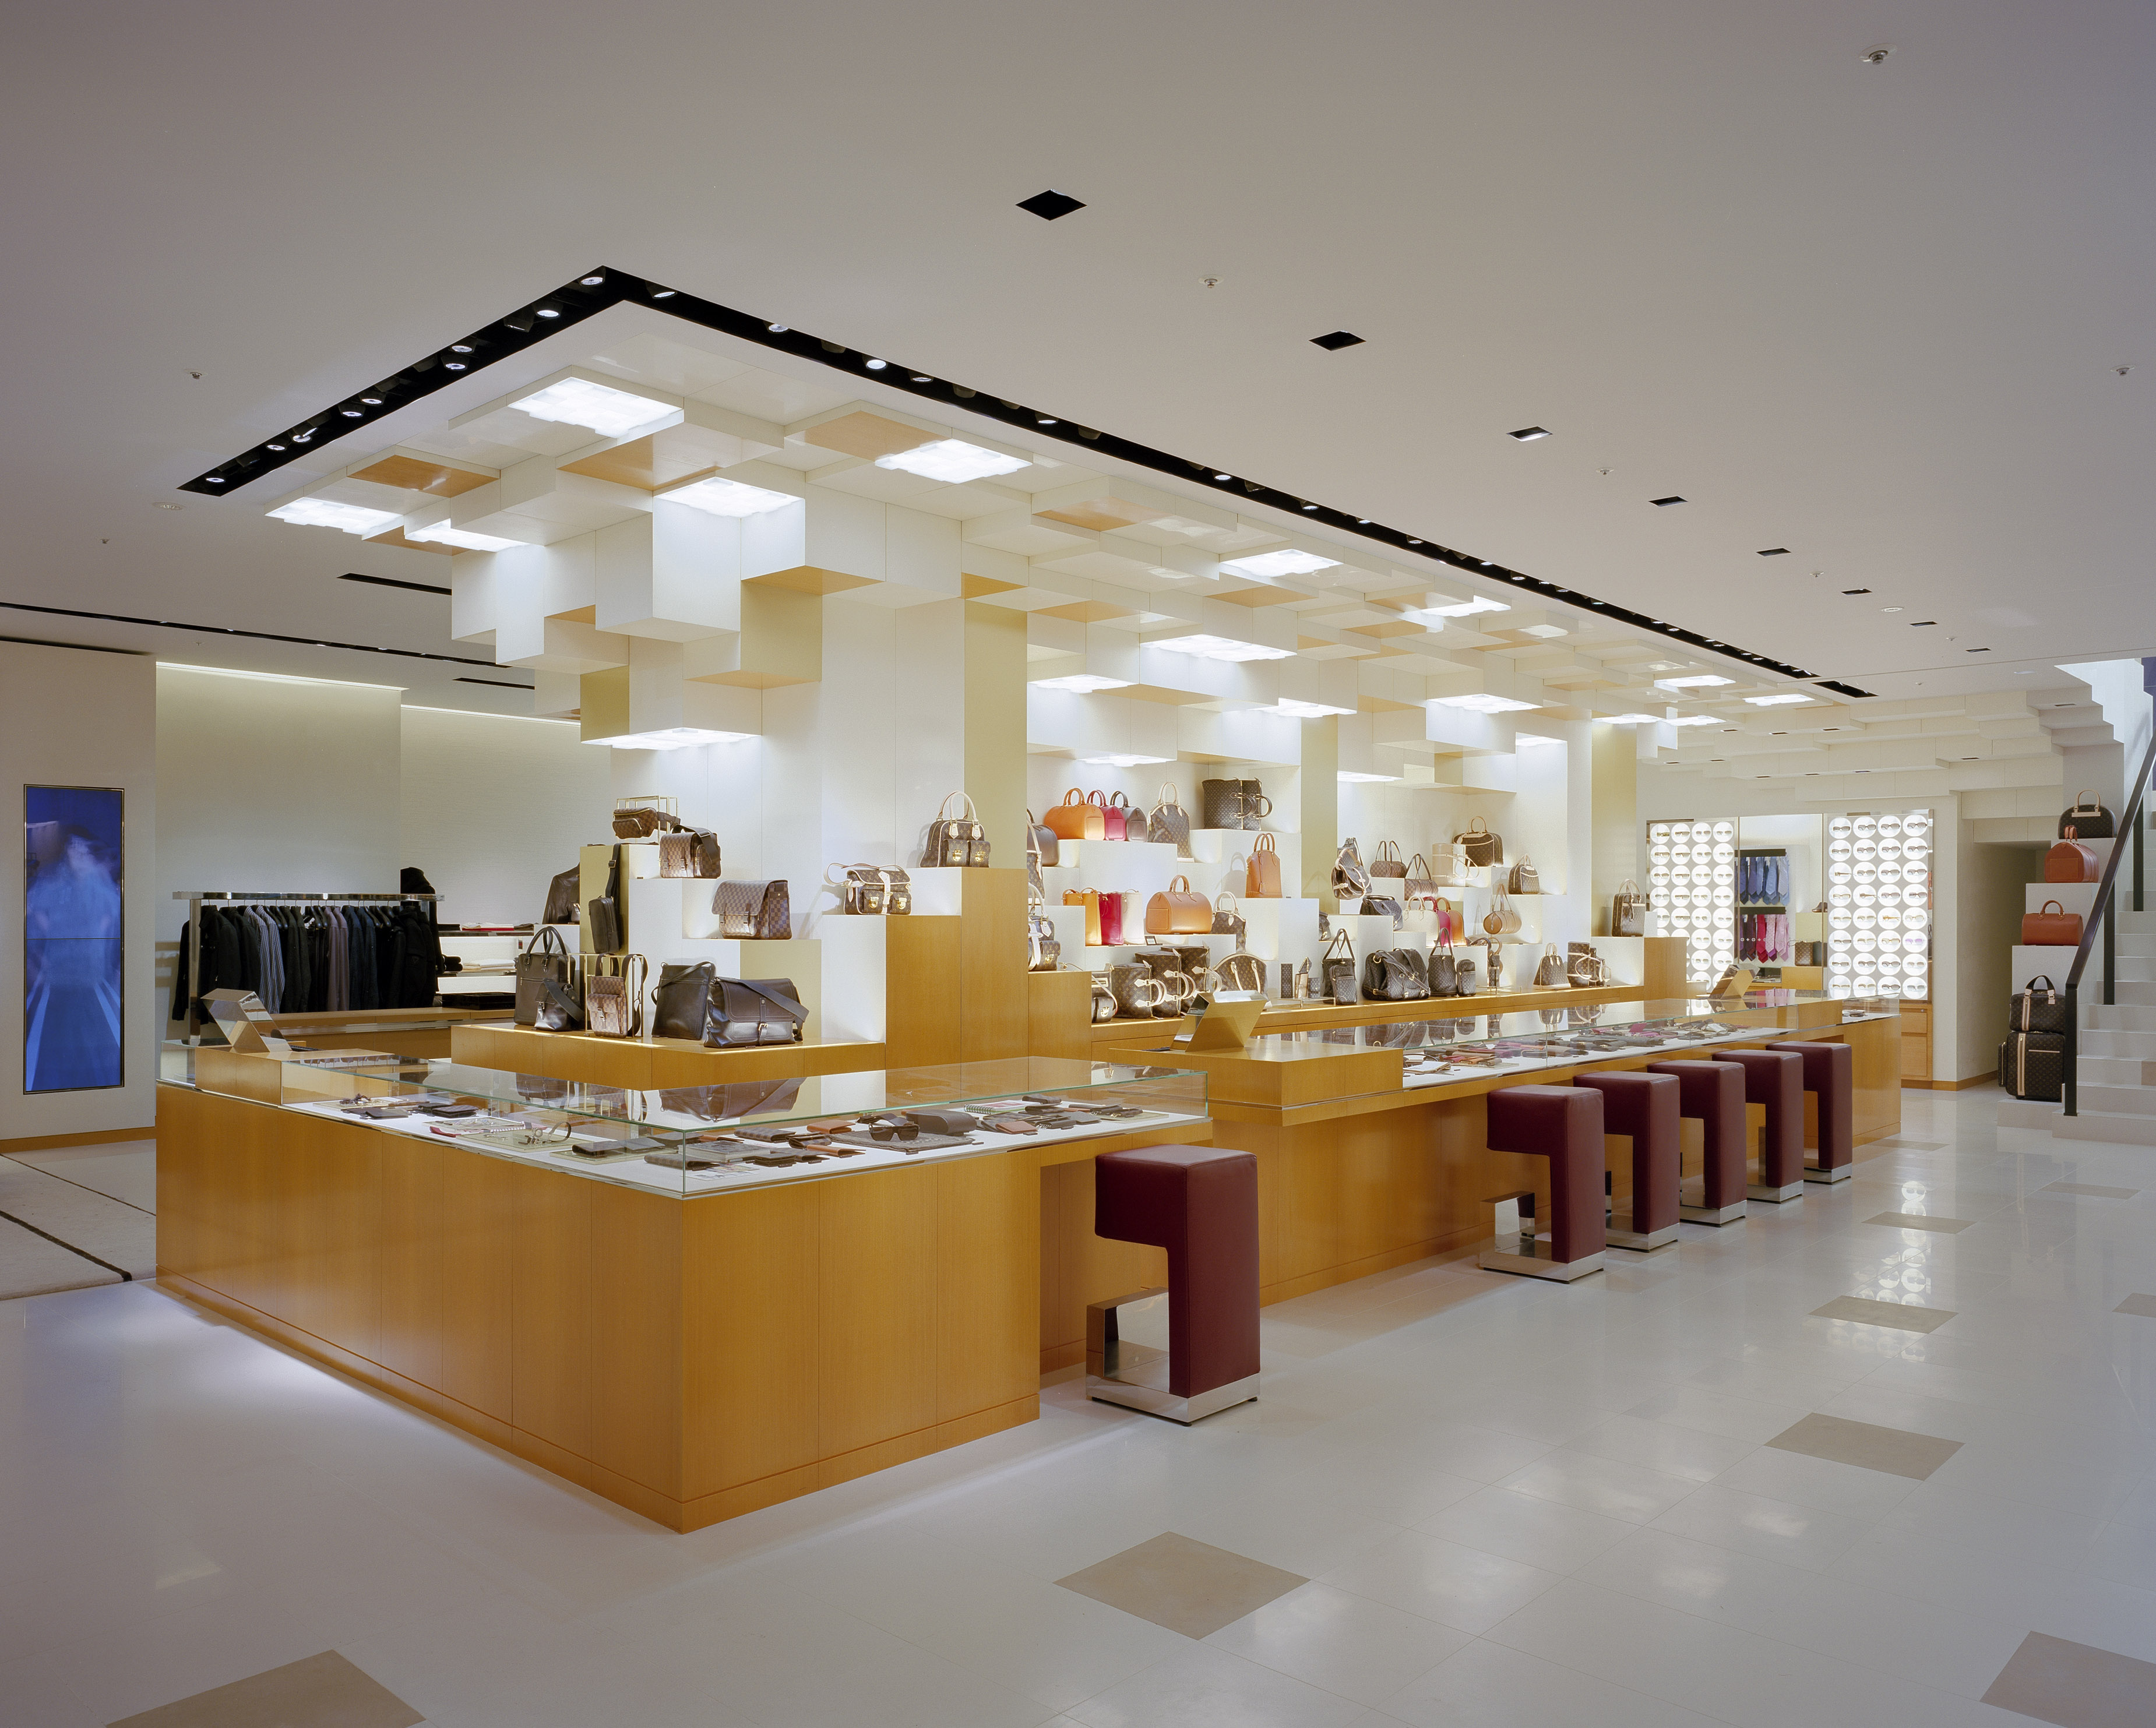 Louis Vuitton Matsuya Ginza building flagship store